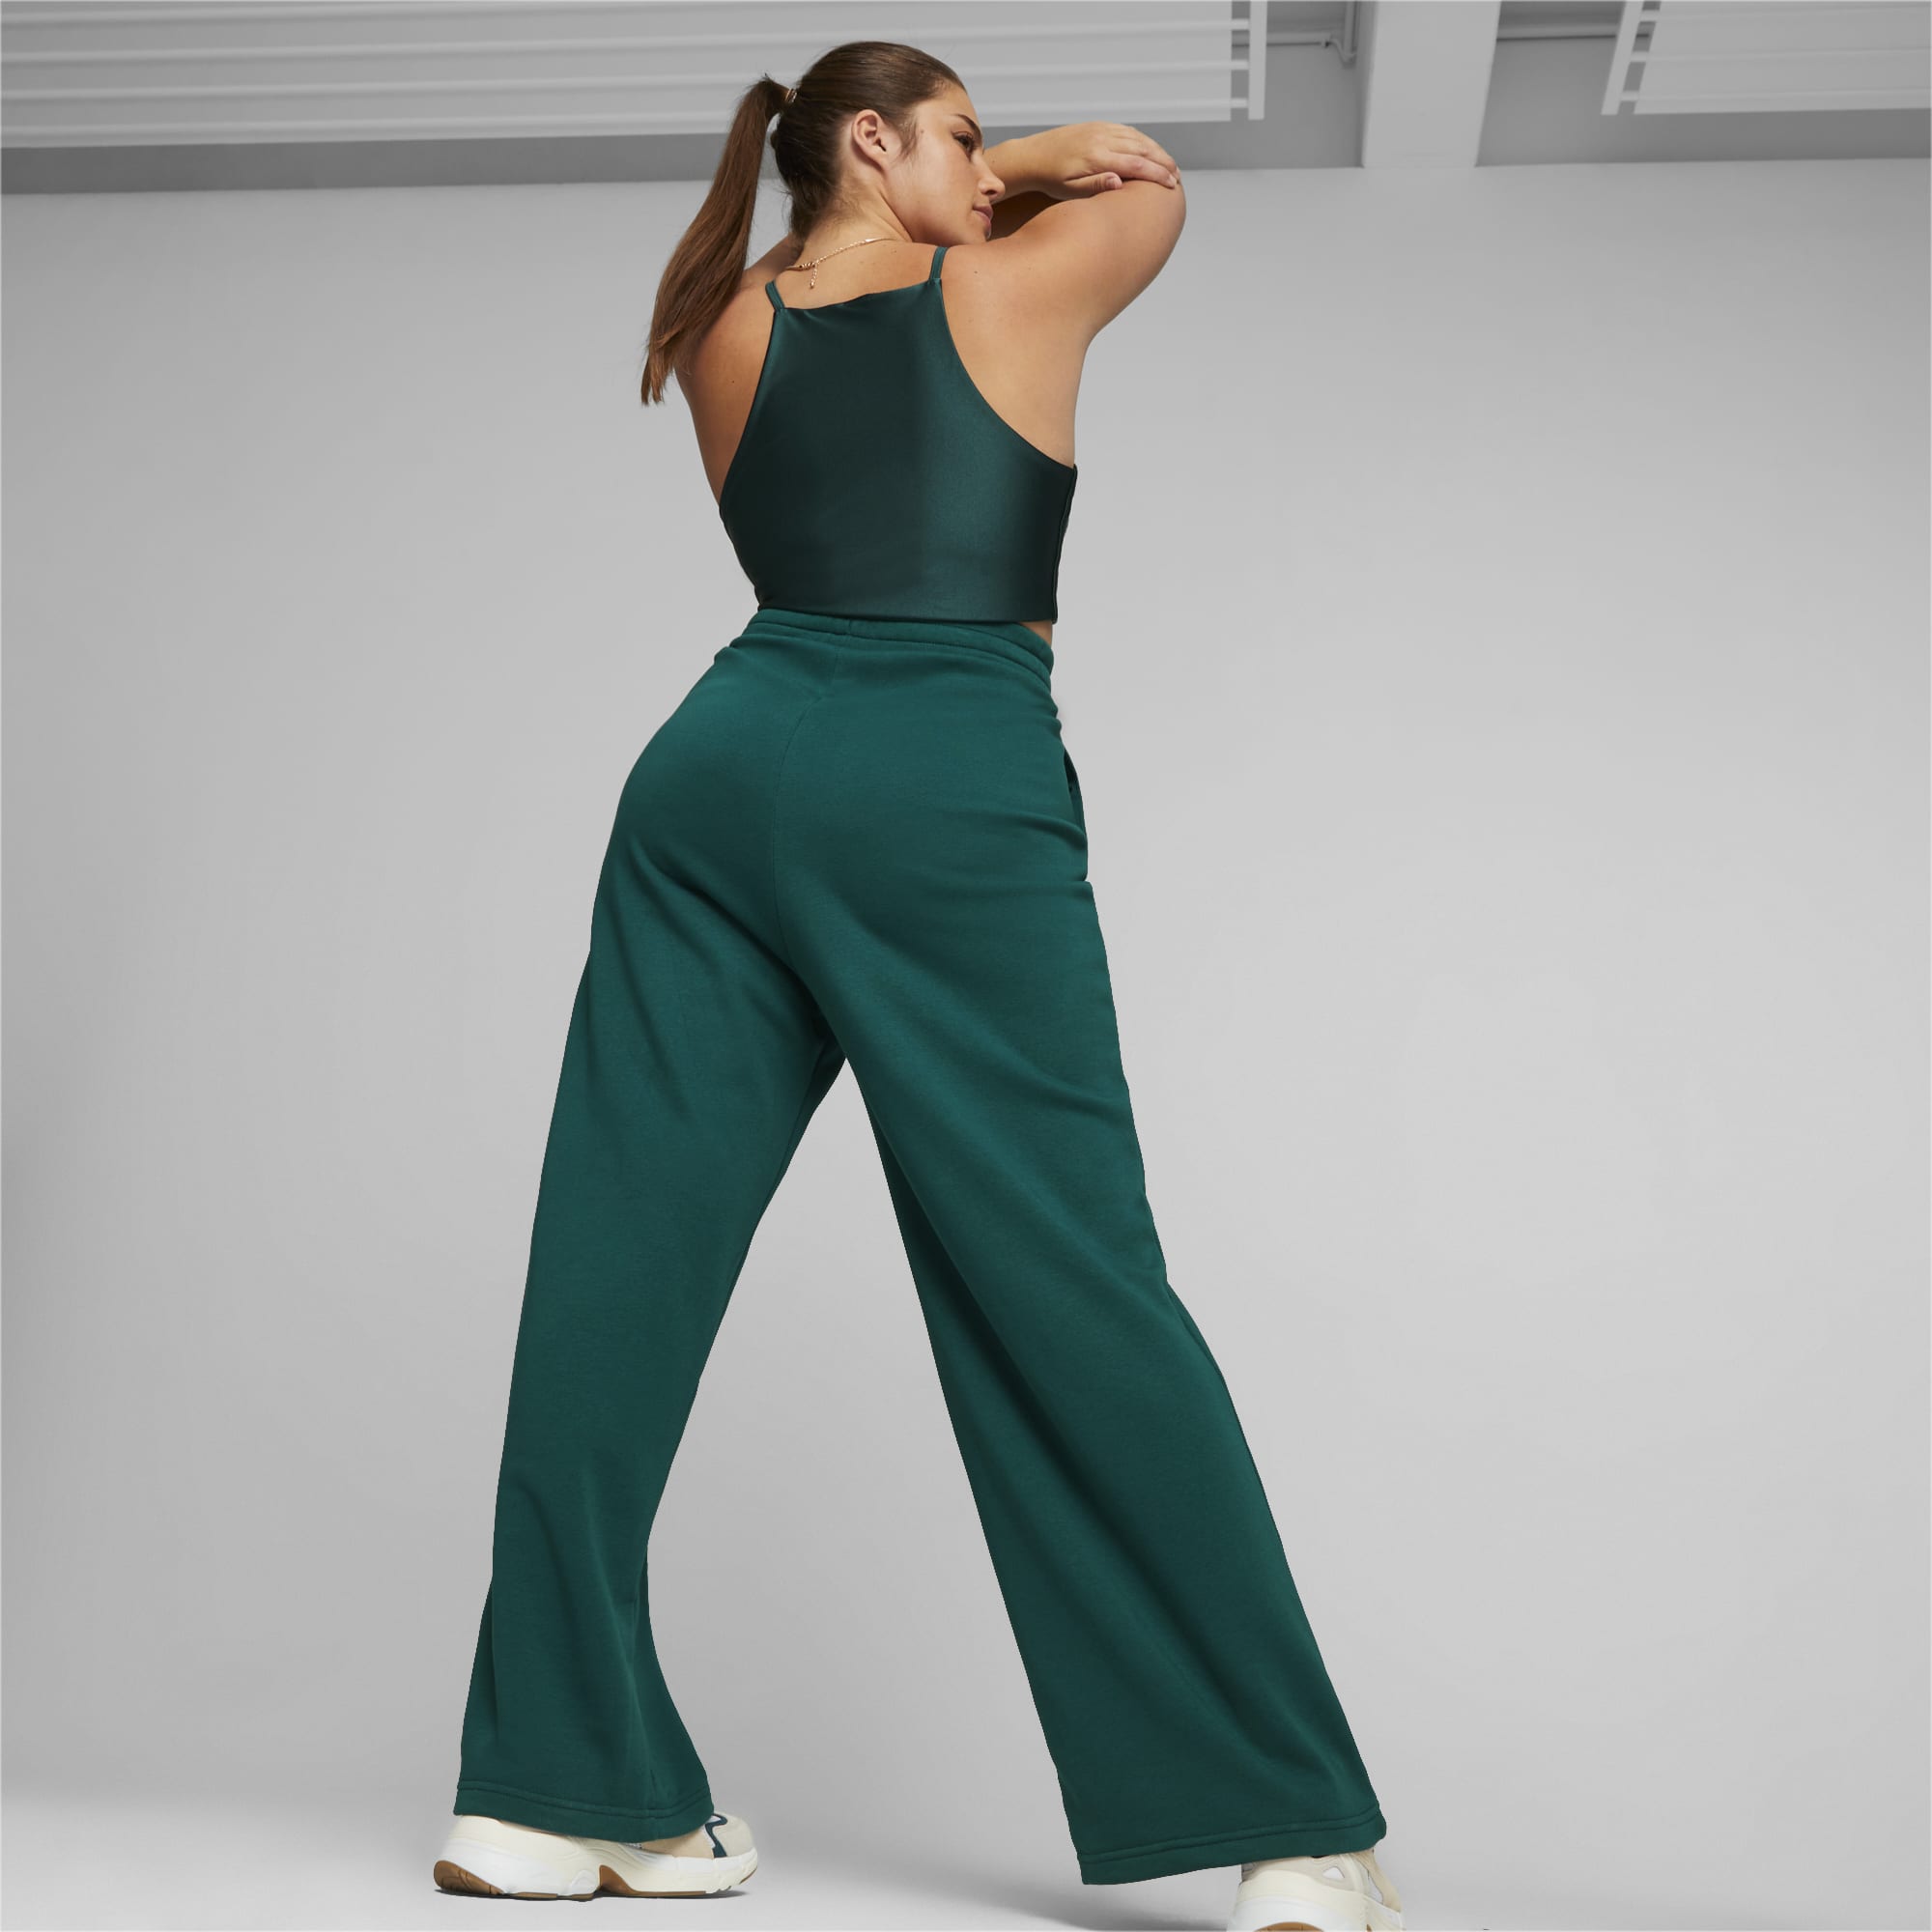 PUMA Classics Women's Relaxed Sweatpants, Malachite, Size 3XL, Clothing